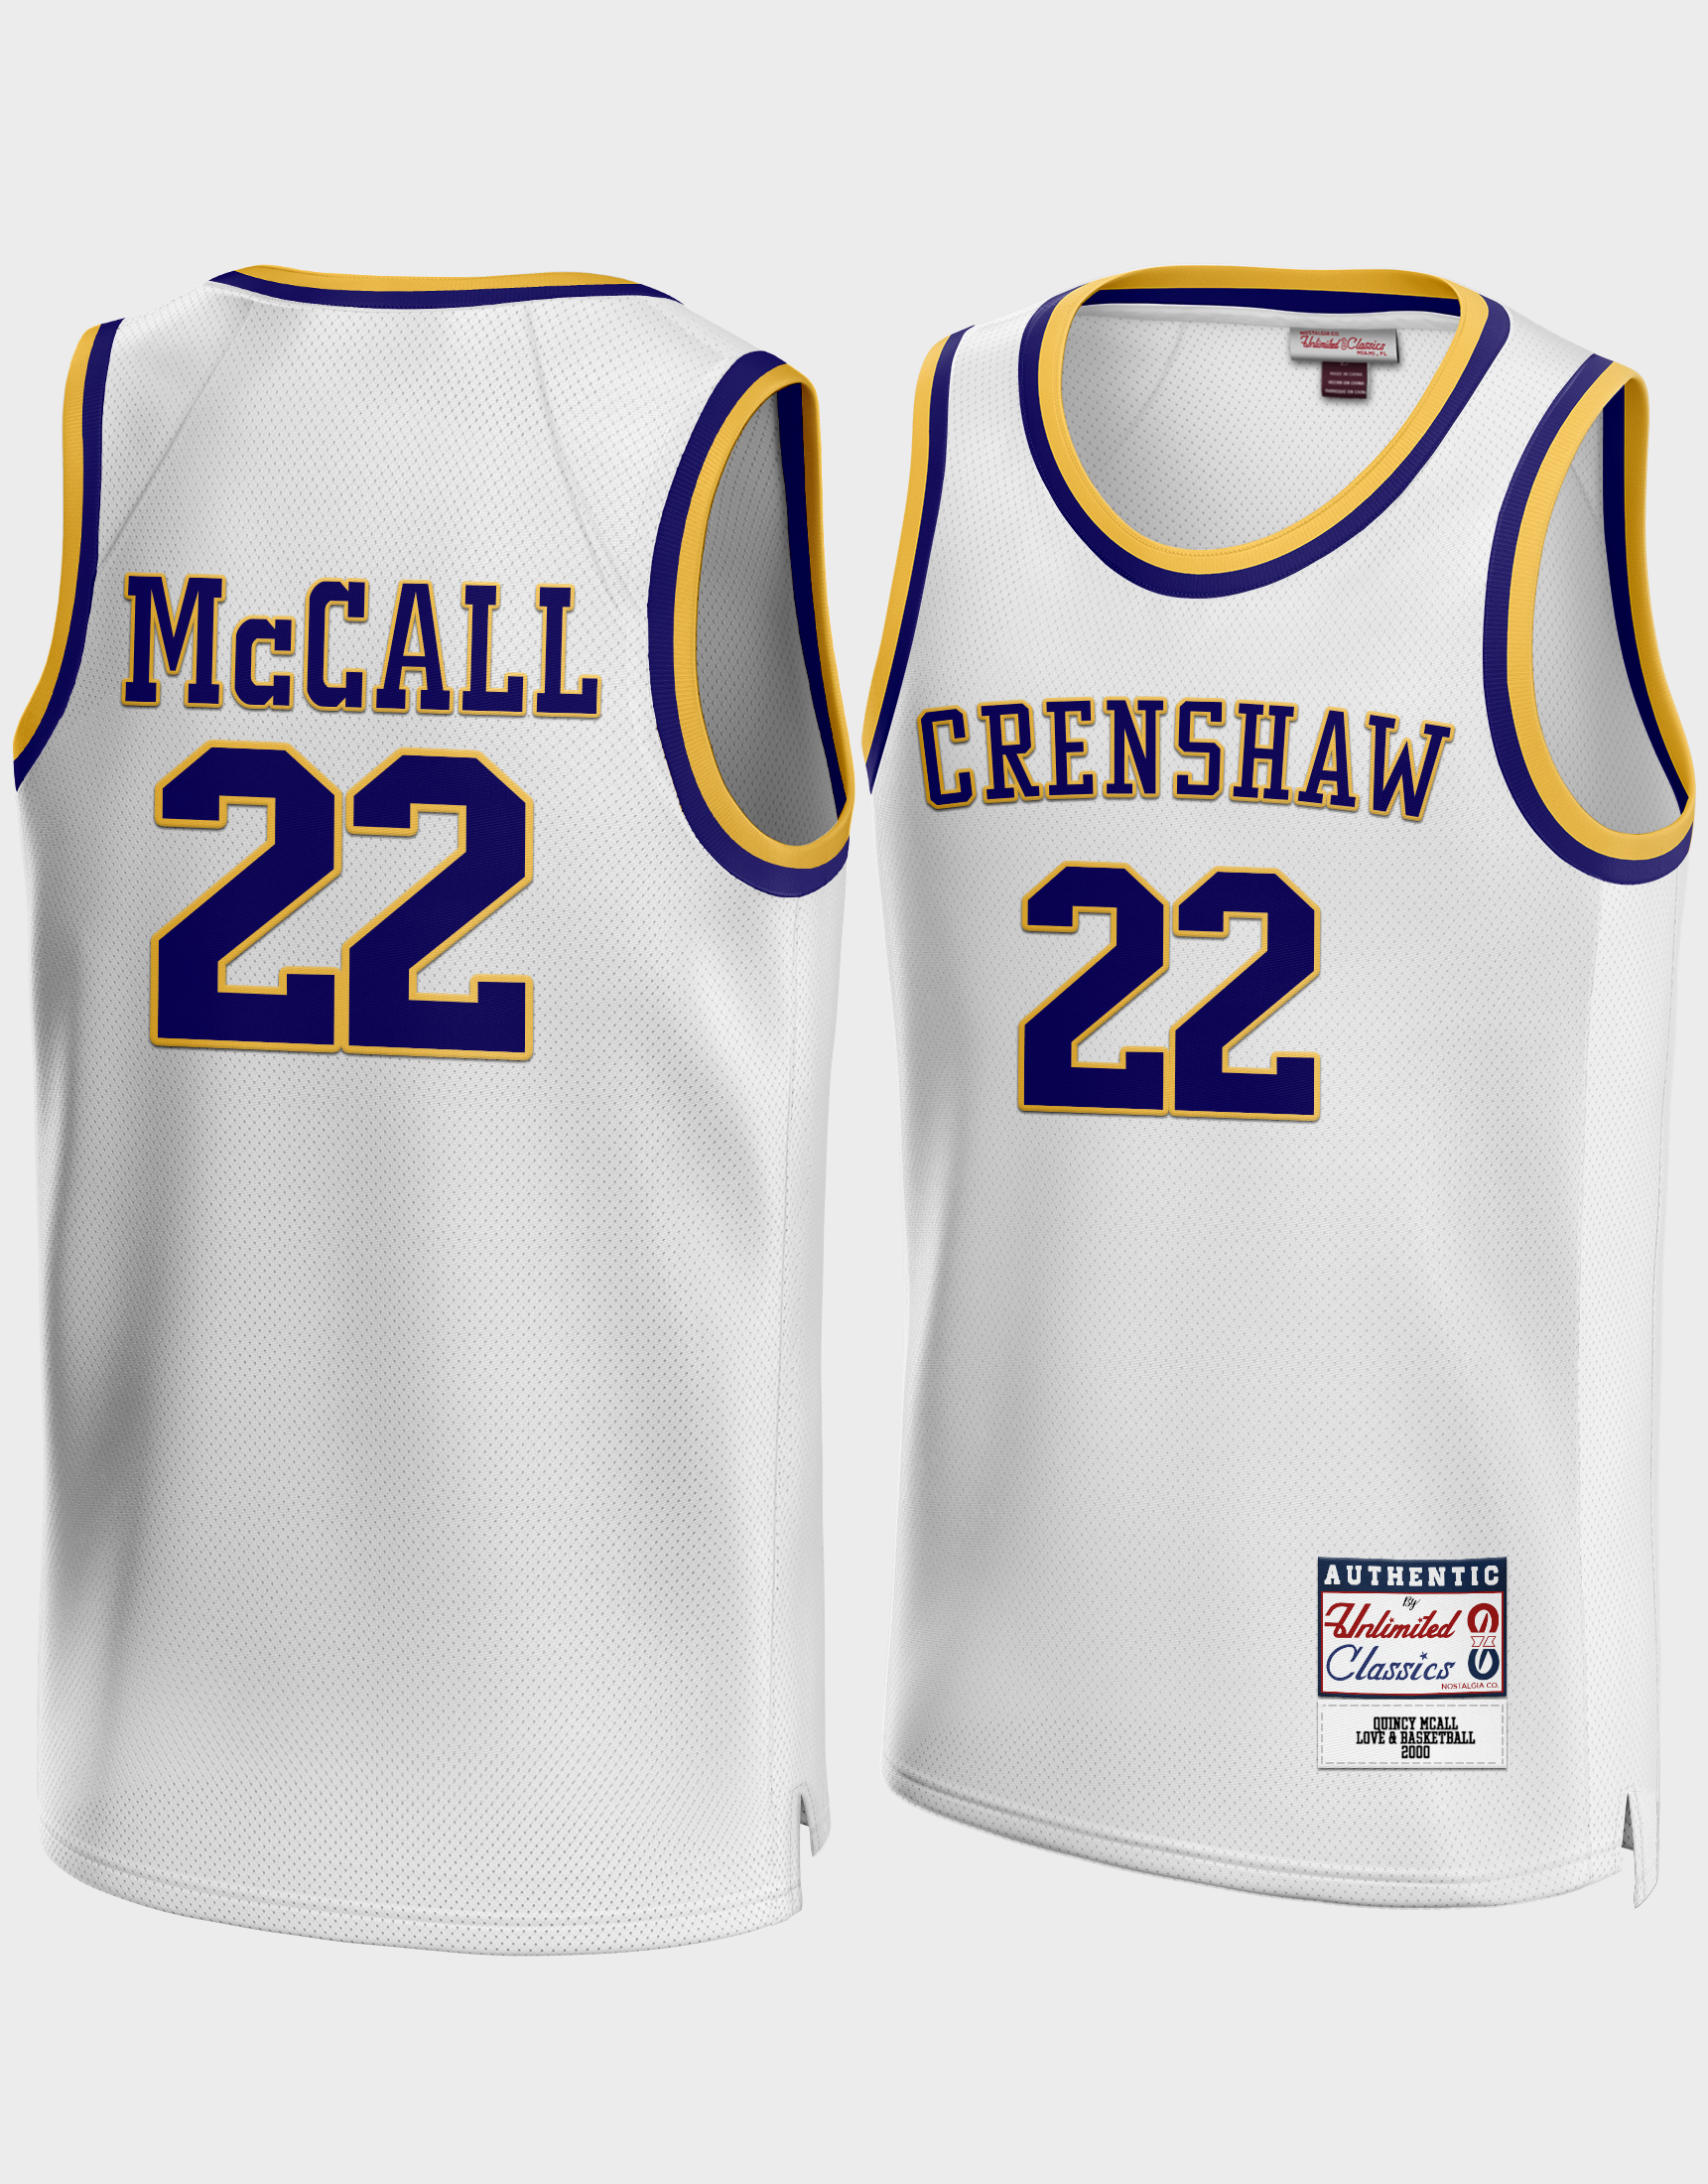 Mccall Crenshaw Jersey 